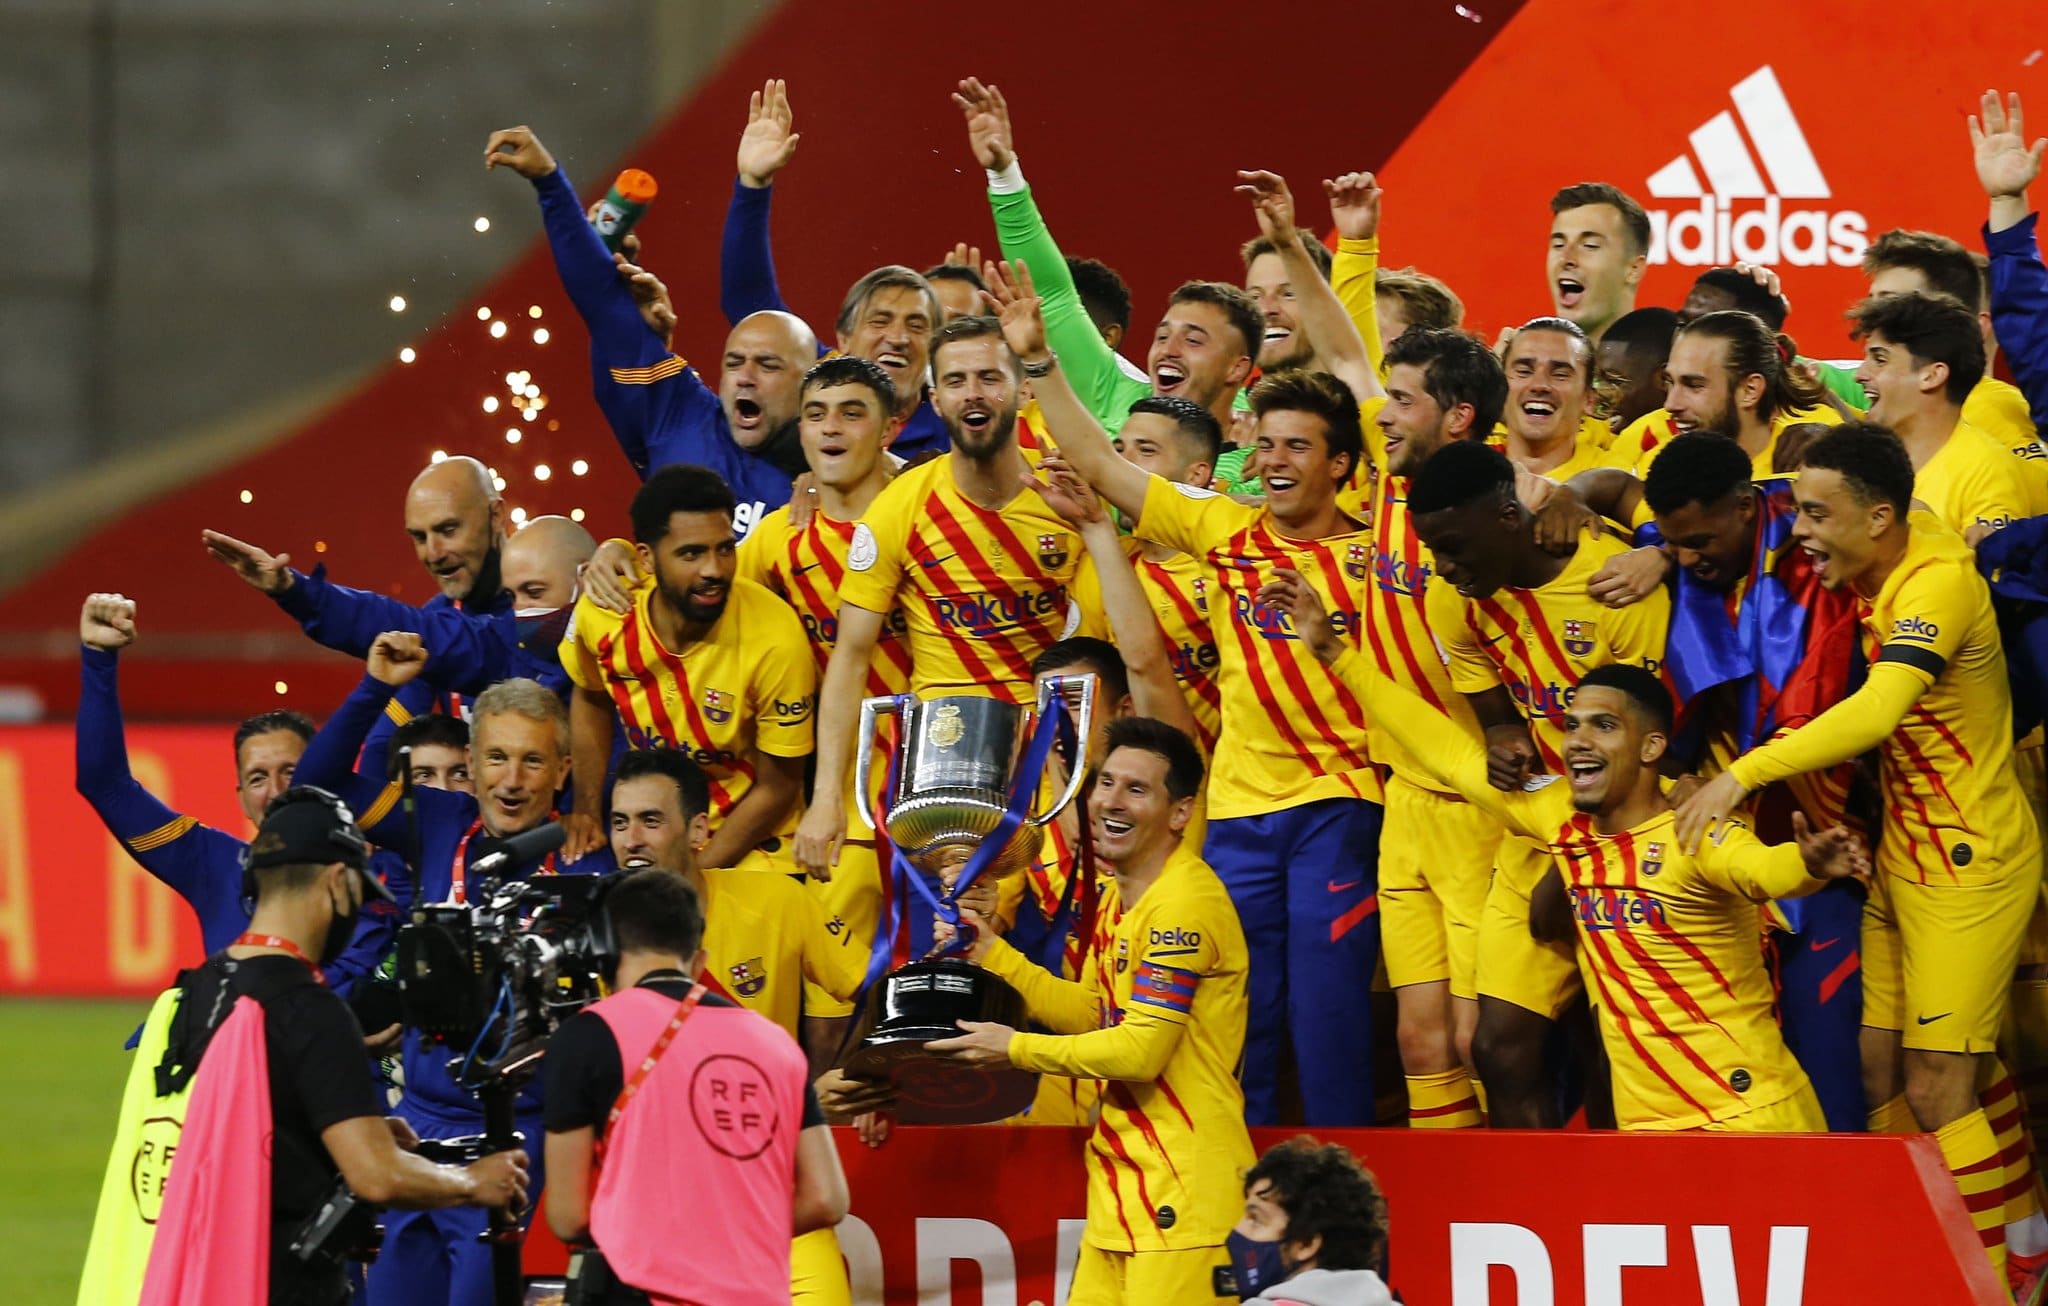 Messi Bags Brace As Barca Hammer Bilbao, Extend Record Copa del Rey Title Win